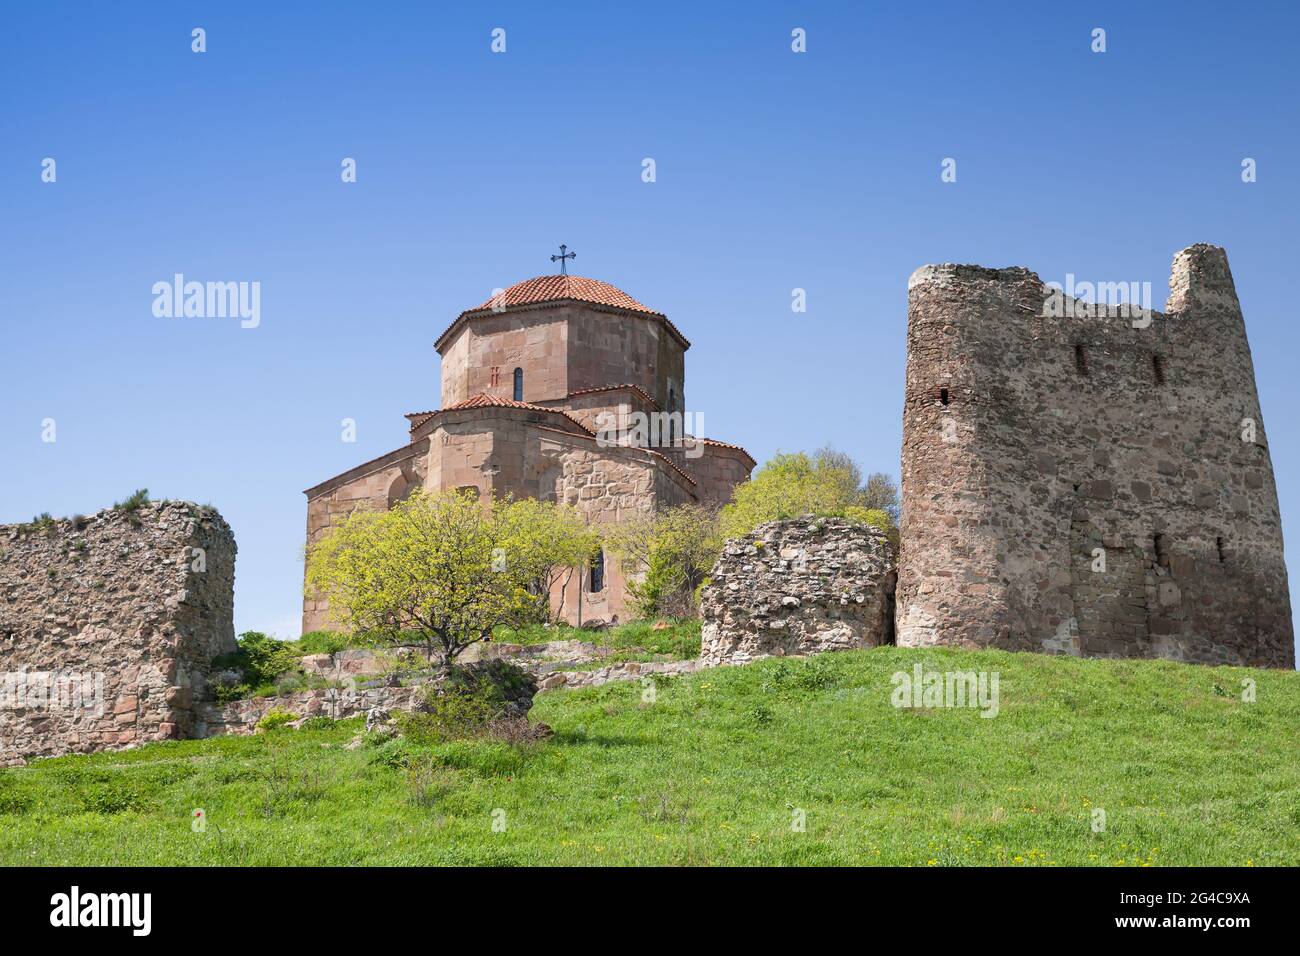 Jvari Monastery, it is a sixth-century Georgian Orthodox monastery located on the mountain peak near Mtskheta, Georgia Stock Photo